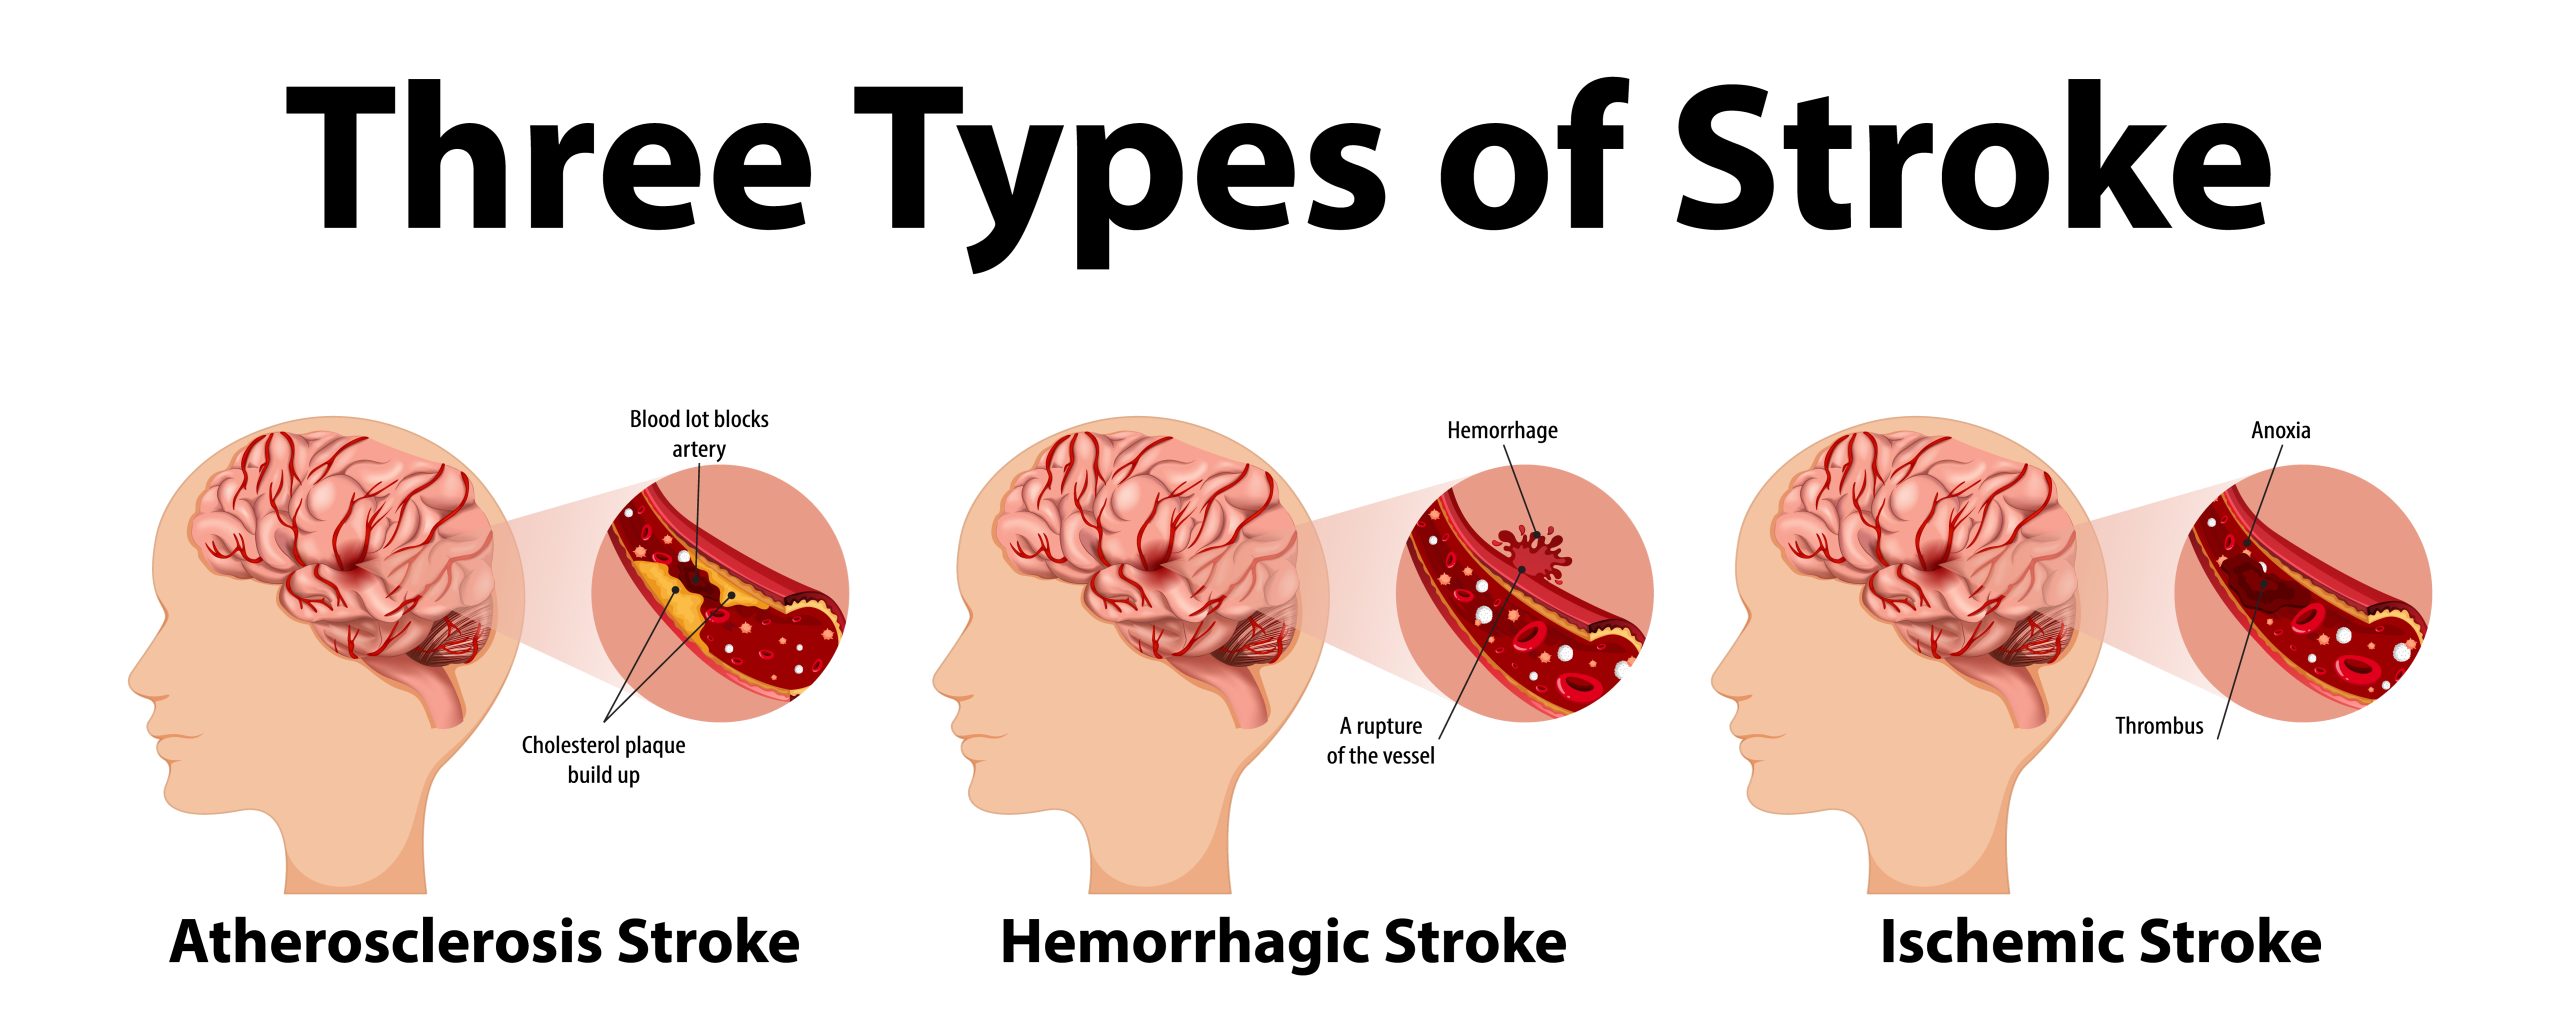 Types of strokes